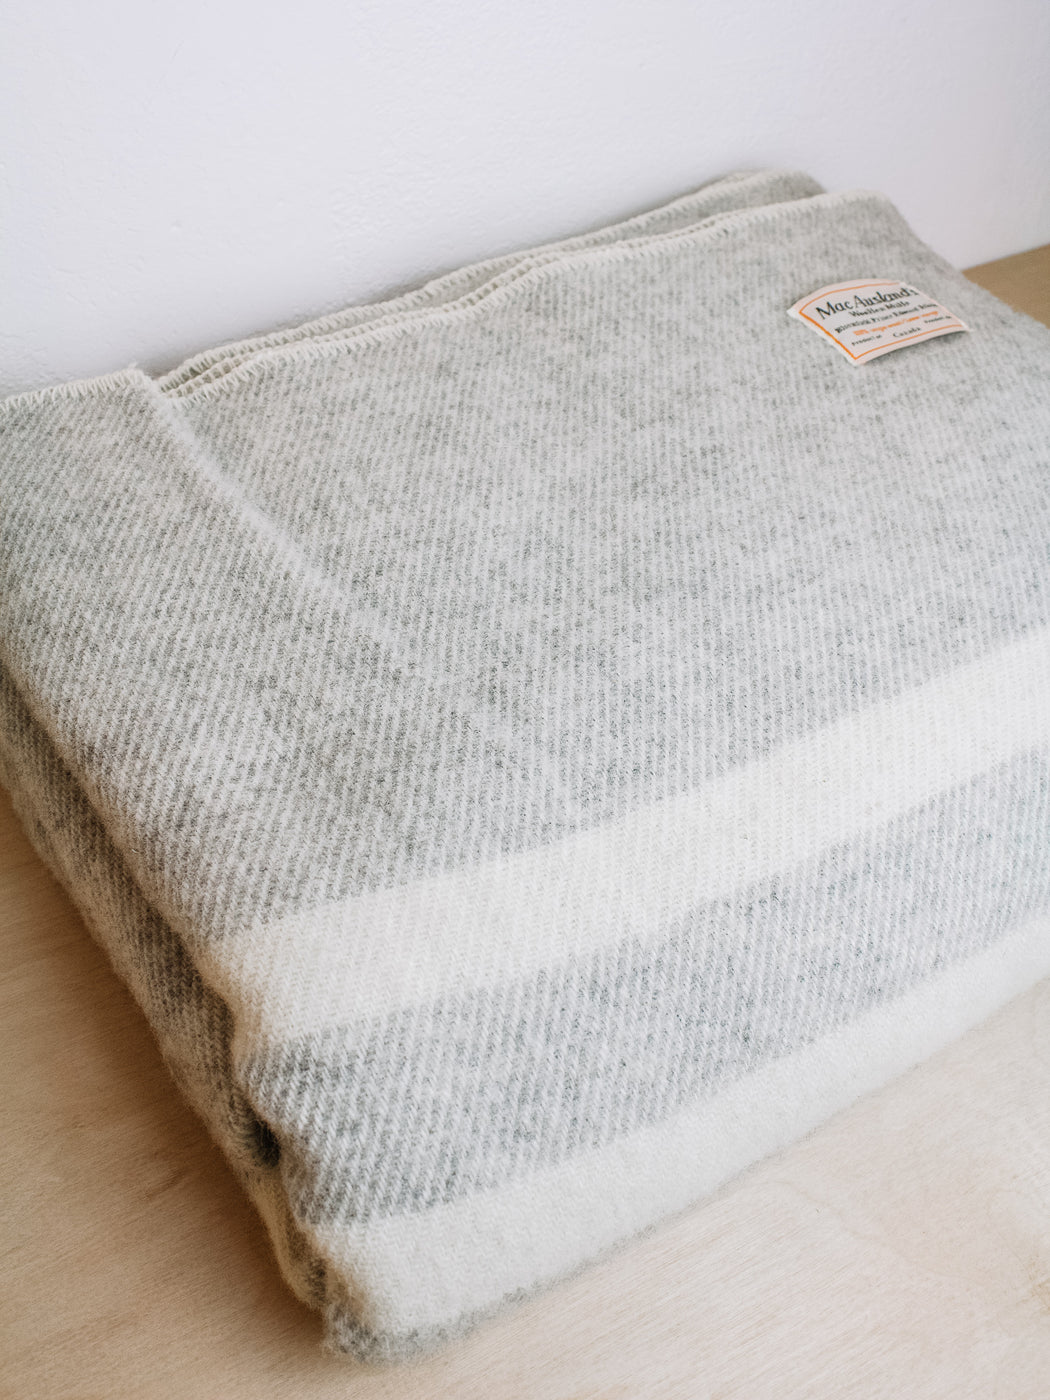 MacAusland - Queen Wool Blanket - Light Grey w/ Cream Stripe